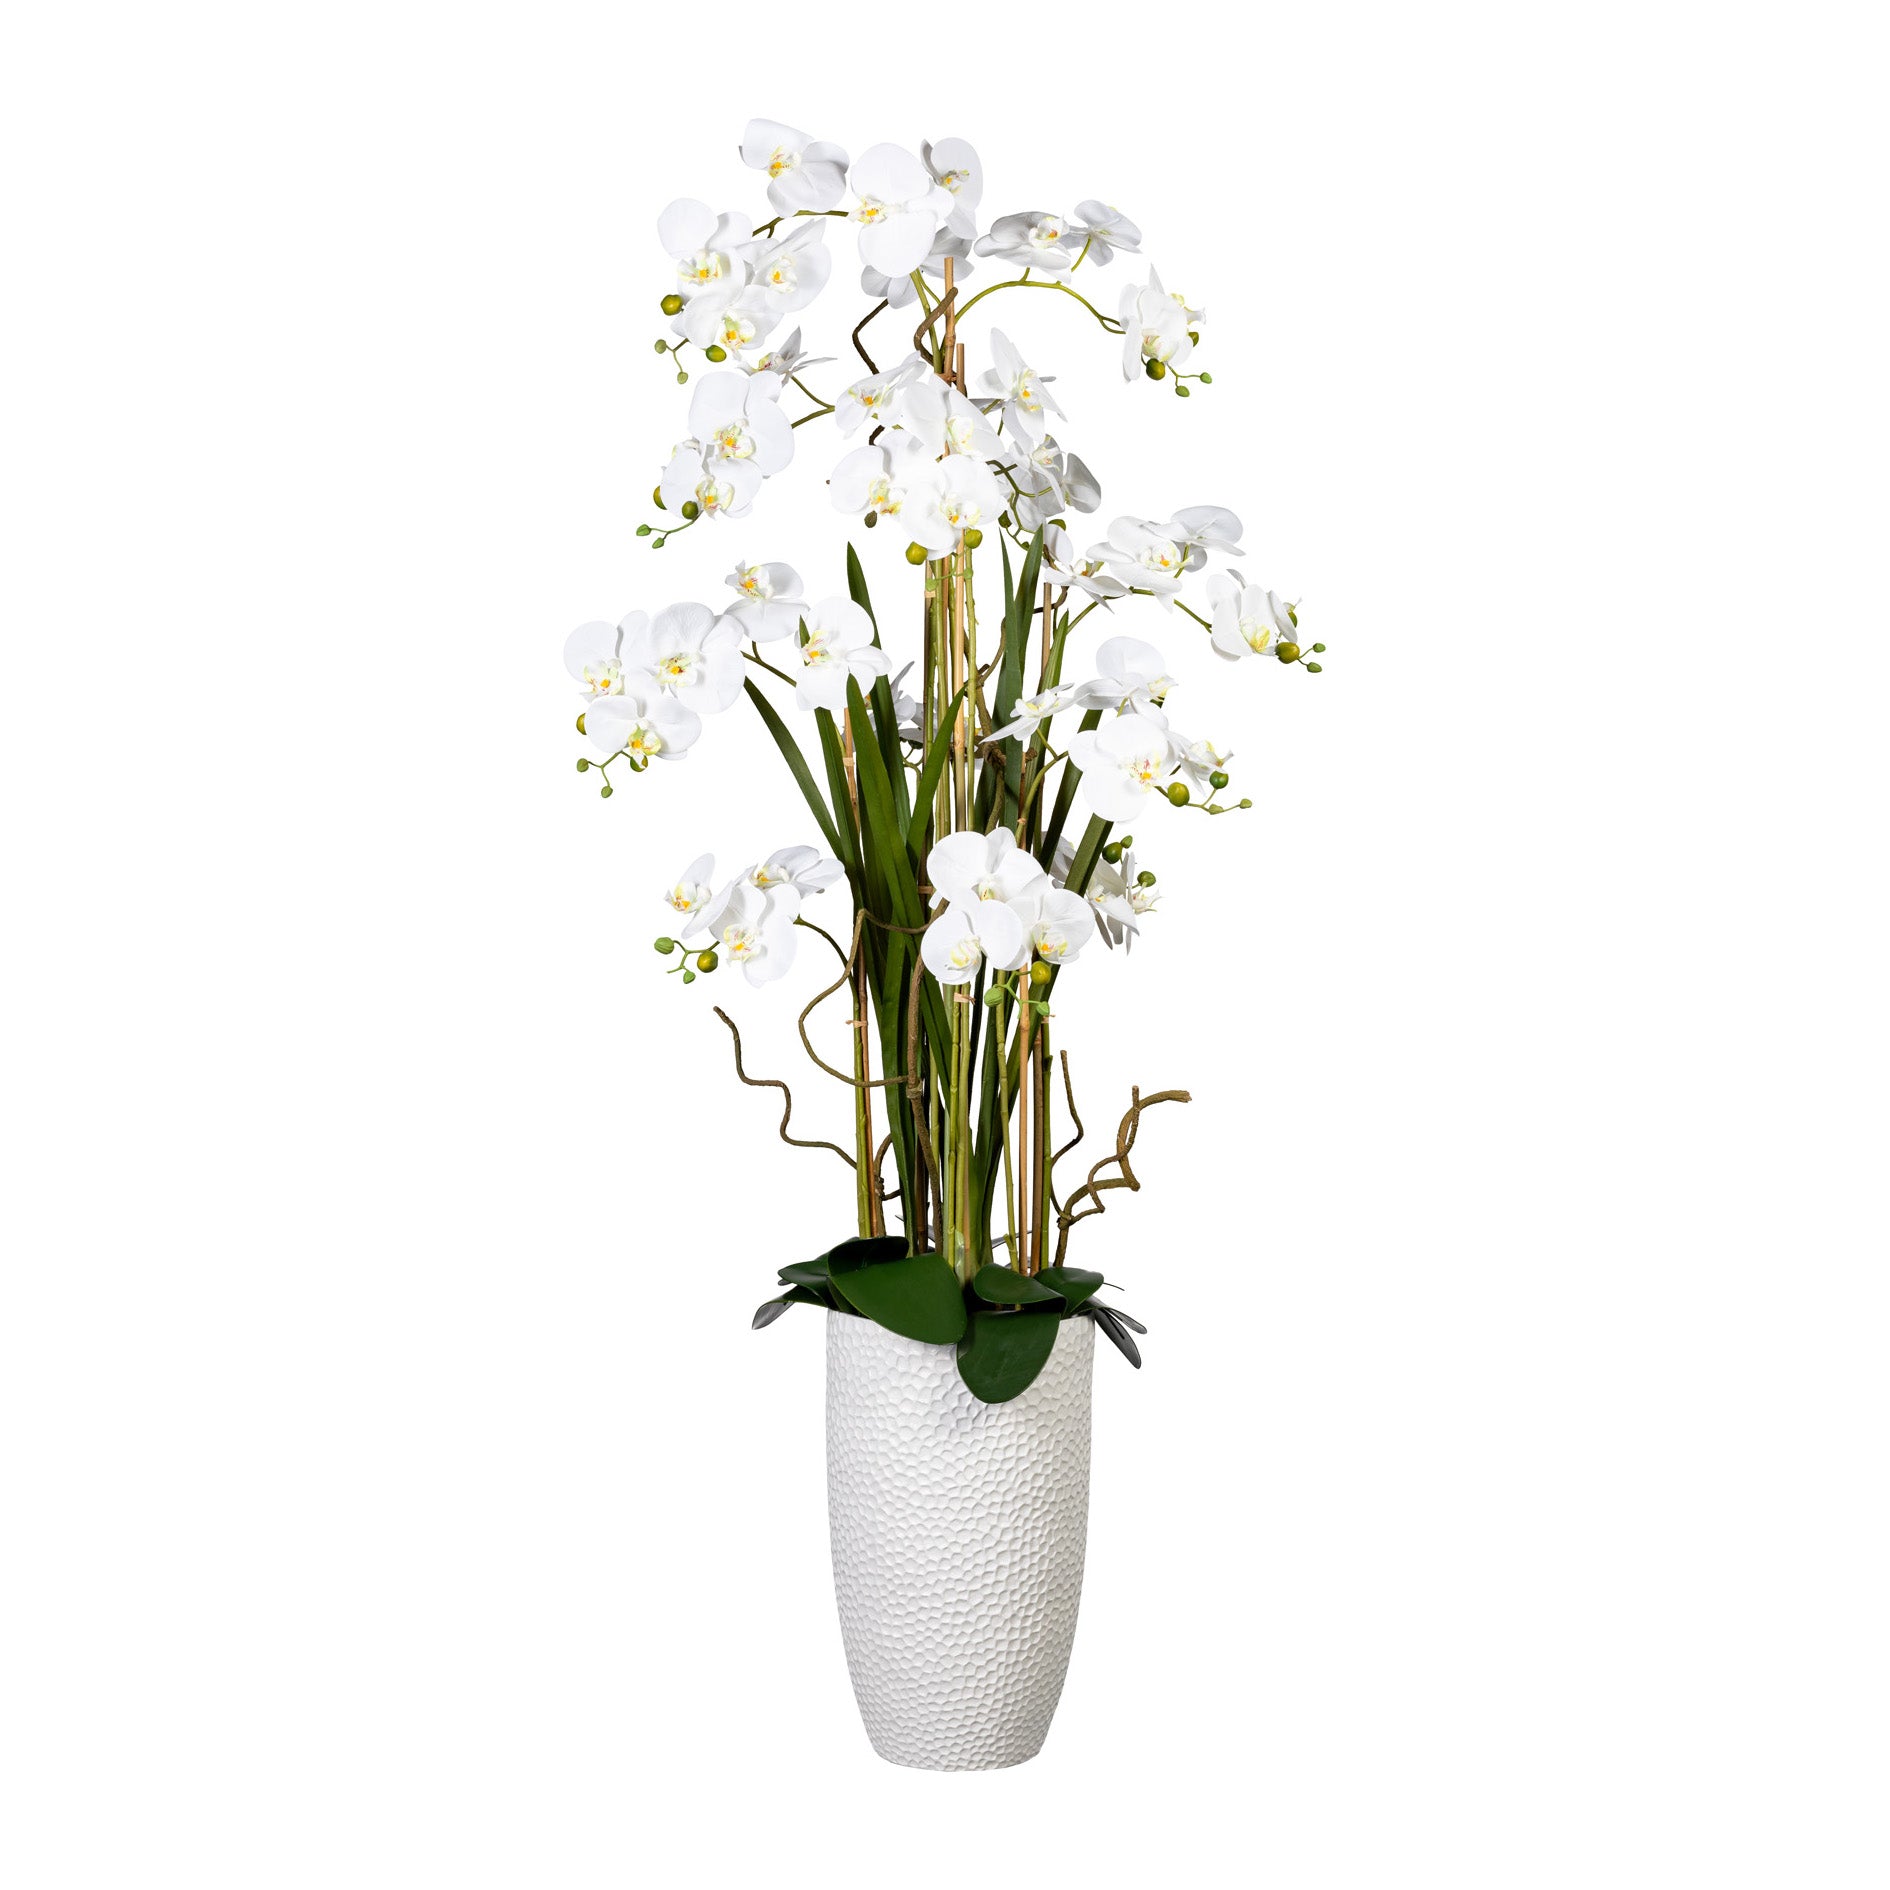 Kopu® Kunstpflanze Orchidee 160 cm weiß im hohen Blumentopf - Phalaenopsis